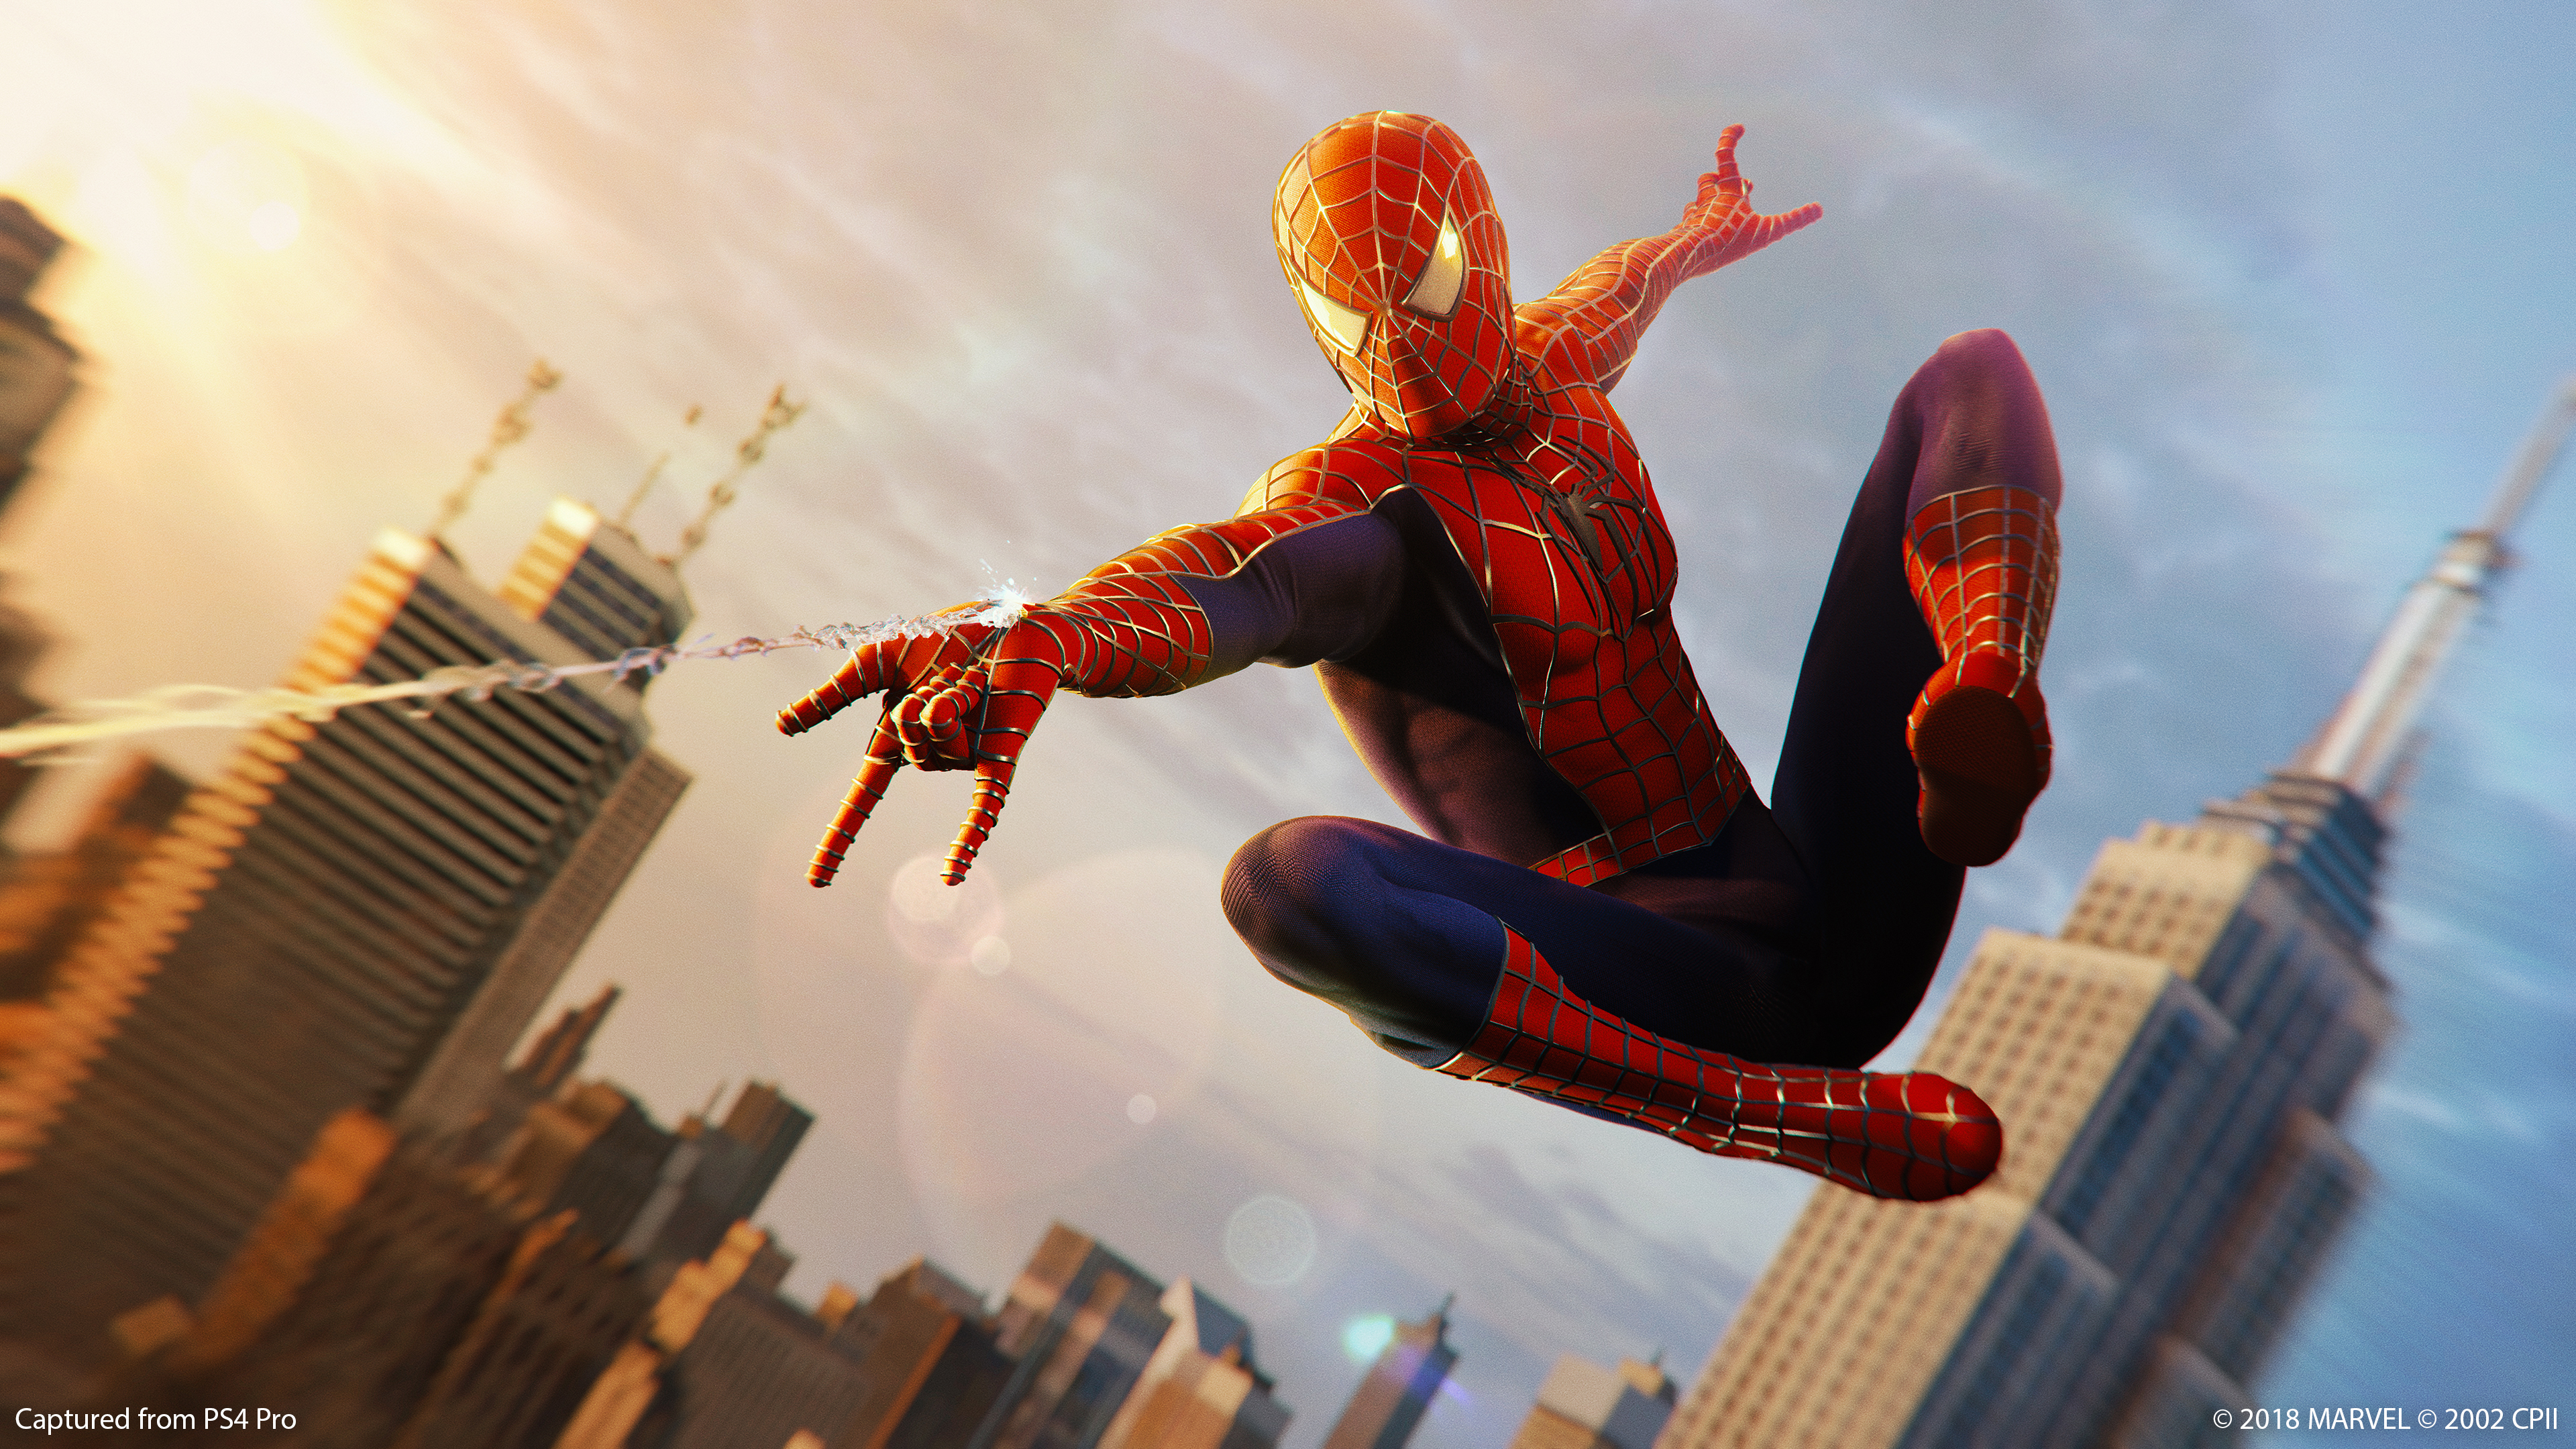 Marvel's Spider-Man on PS4